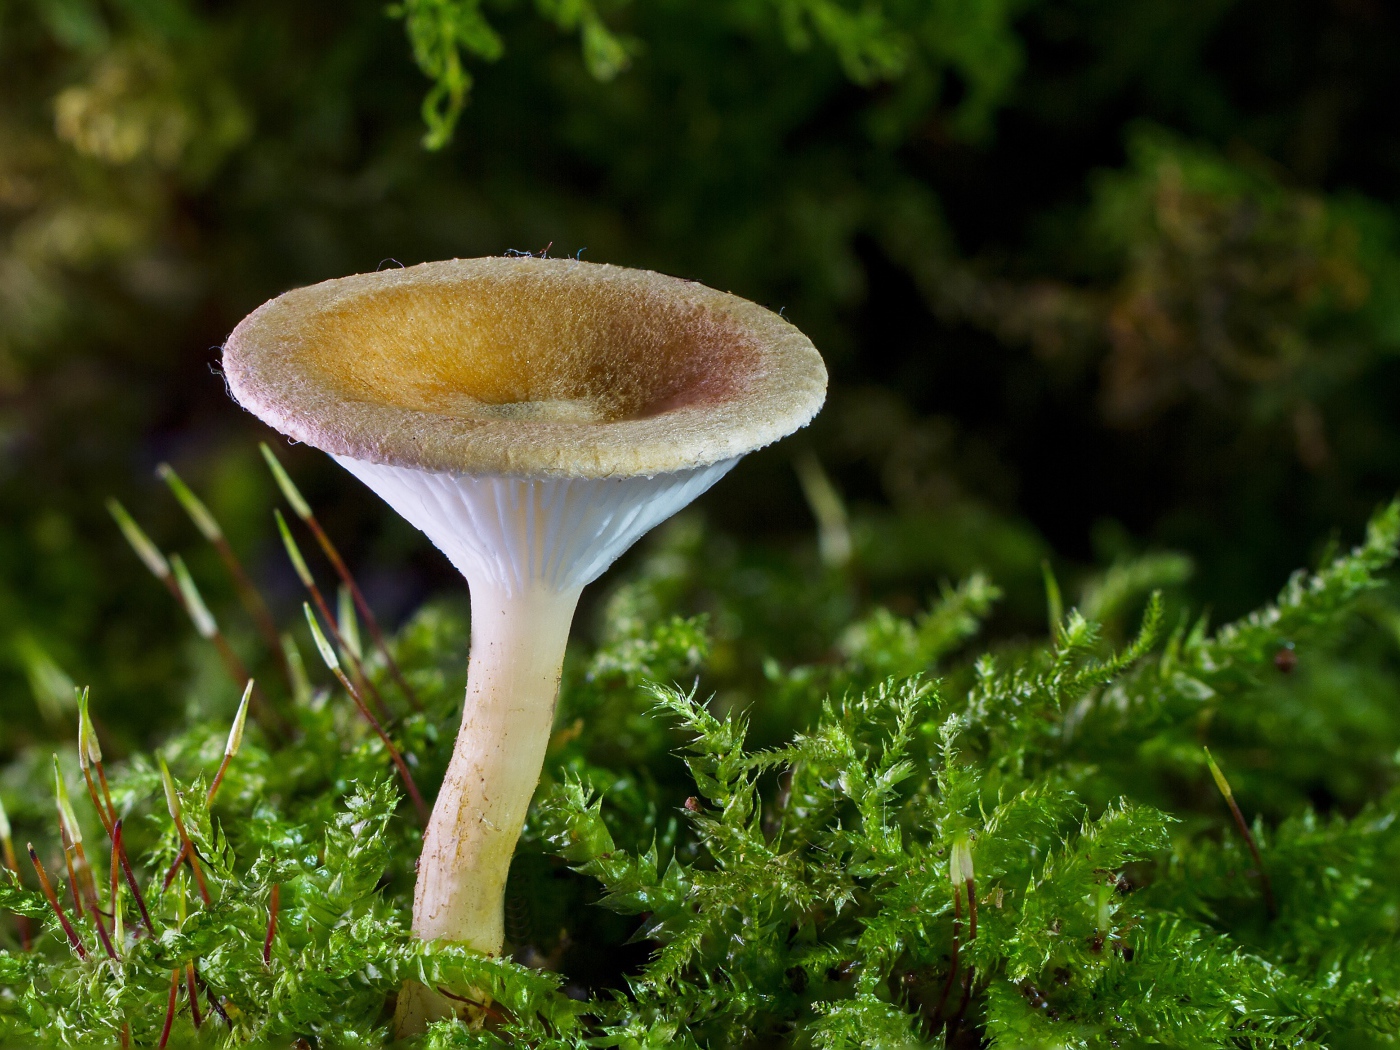 A small mushroom on the green earth